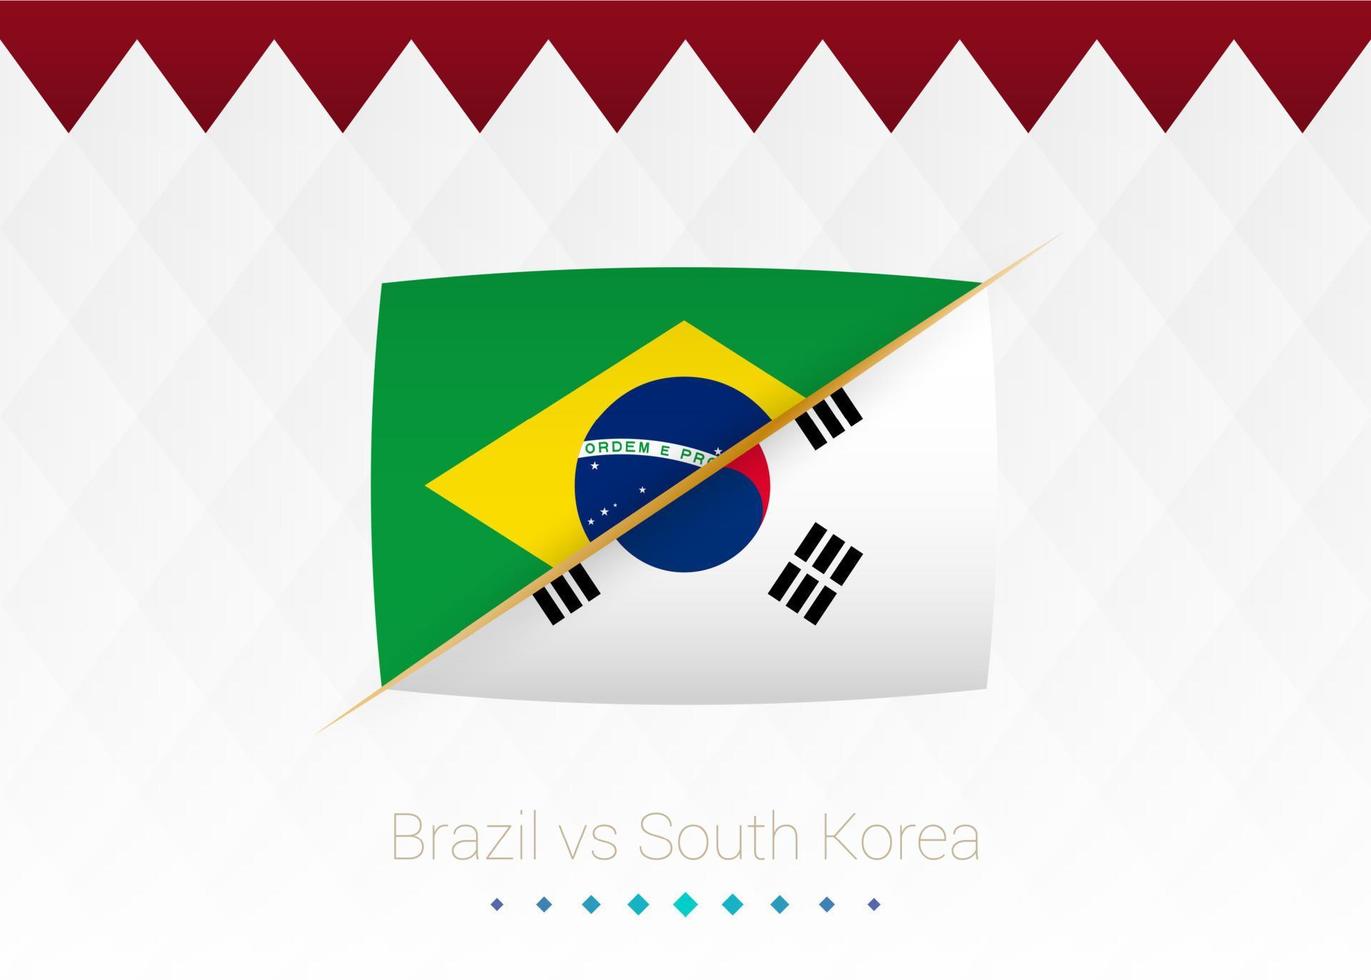 National football team Brazil vs South Korea, Round of 16. Soccer 2022 match versus icon. vector